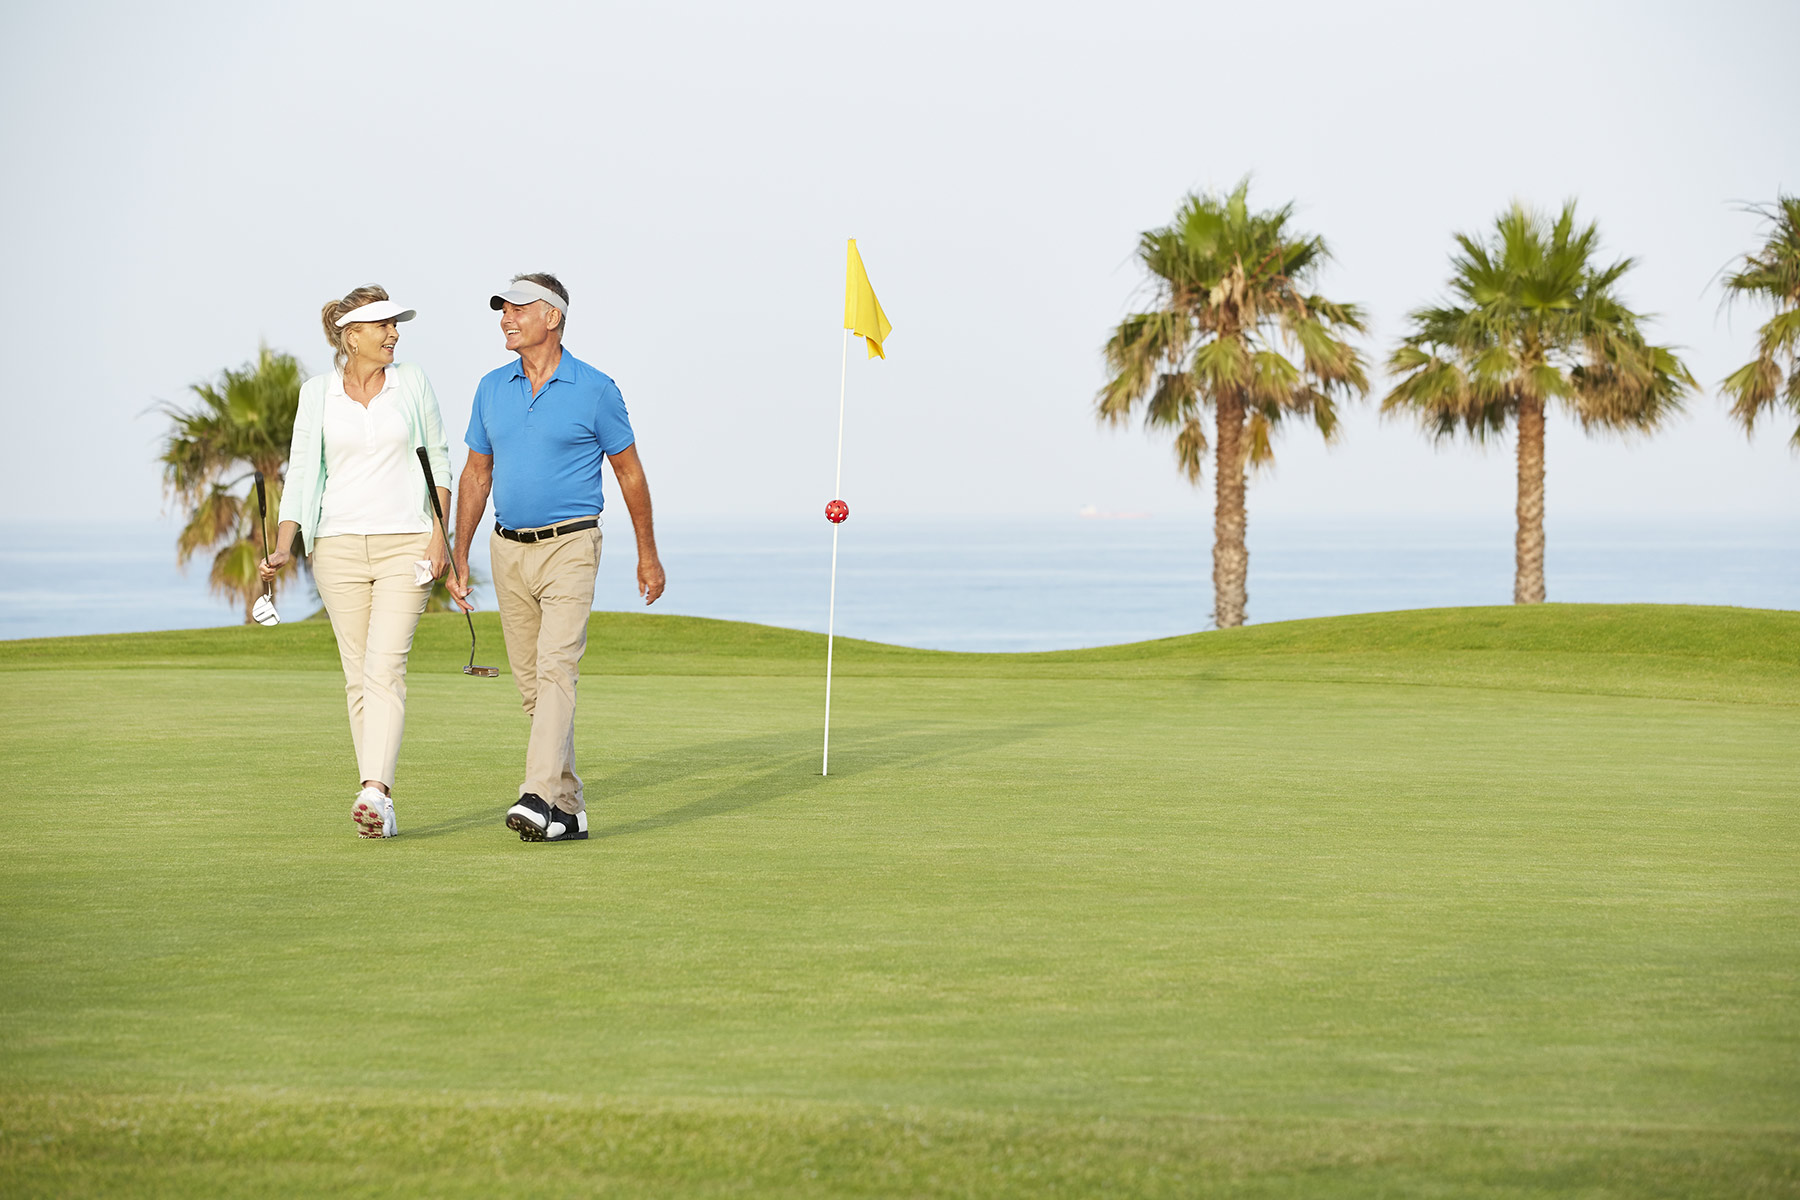 Discover these Golf Courses near Siesta Key, FL